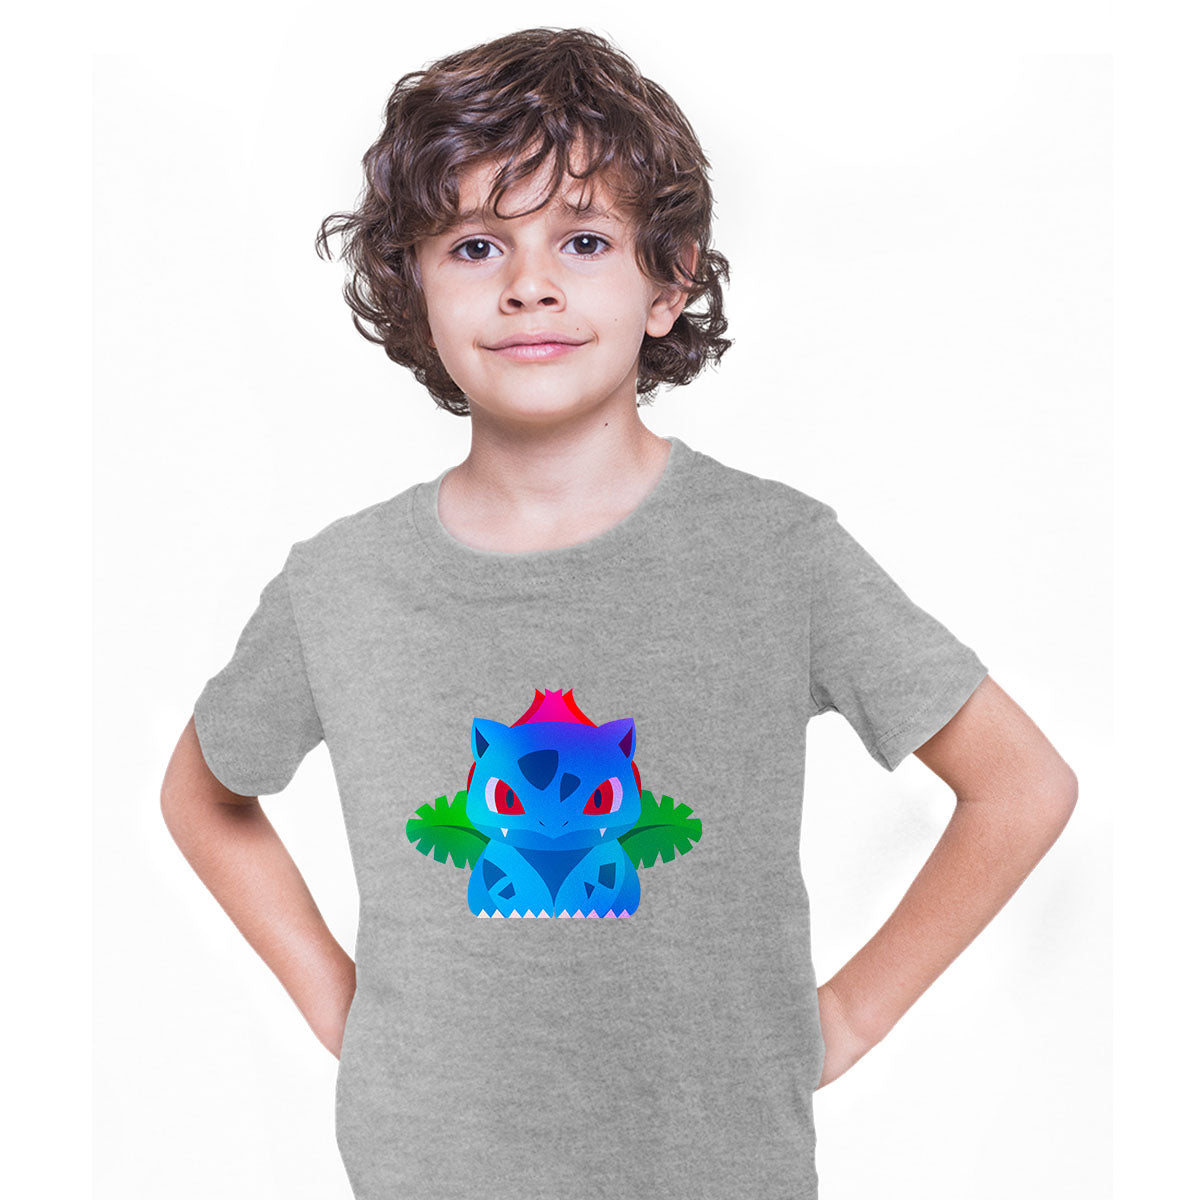 Ivysaur Pokemon Go T-shirt for Kids Boys Girls Brand New - Kuzi Tees